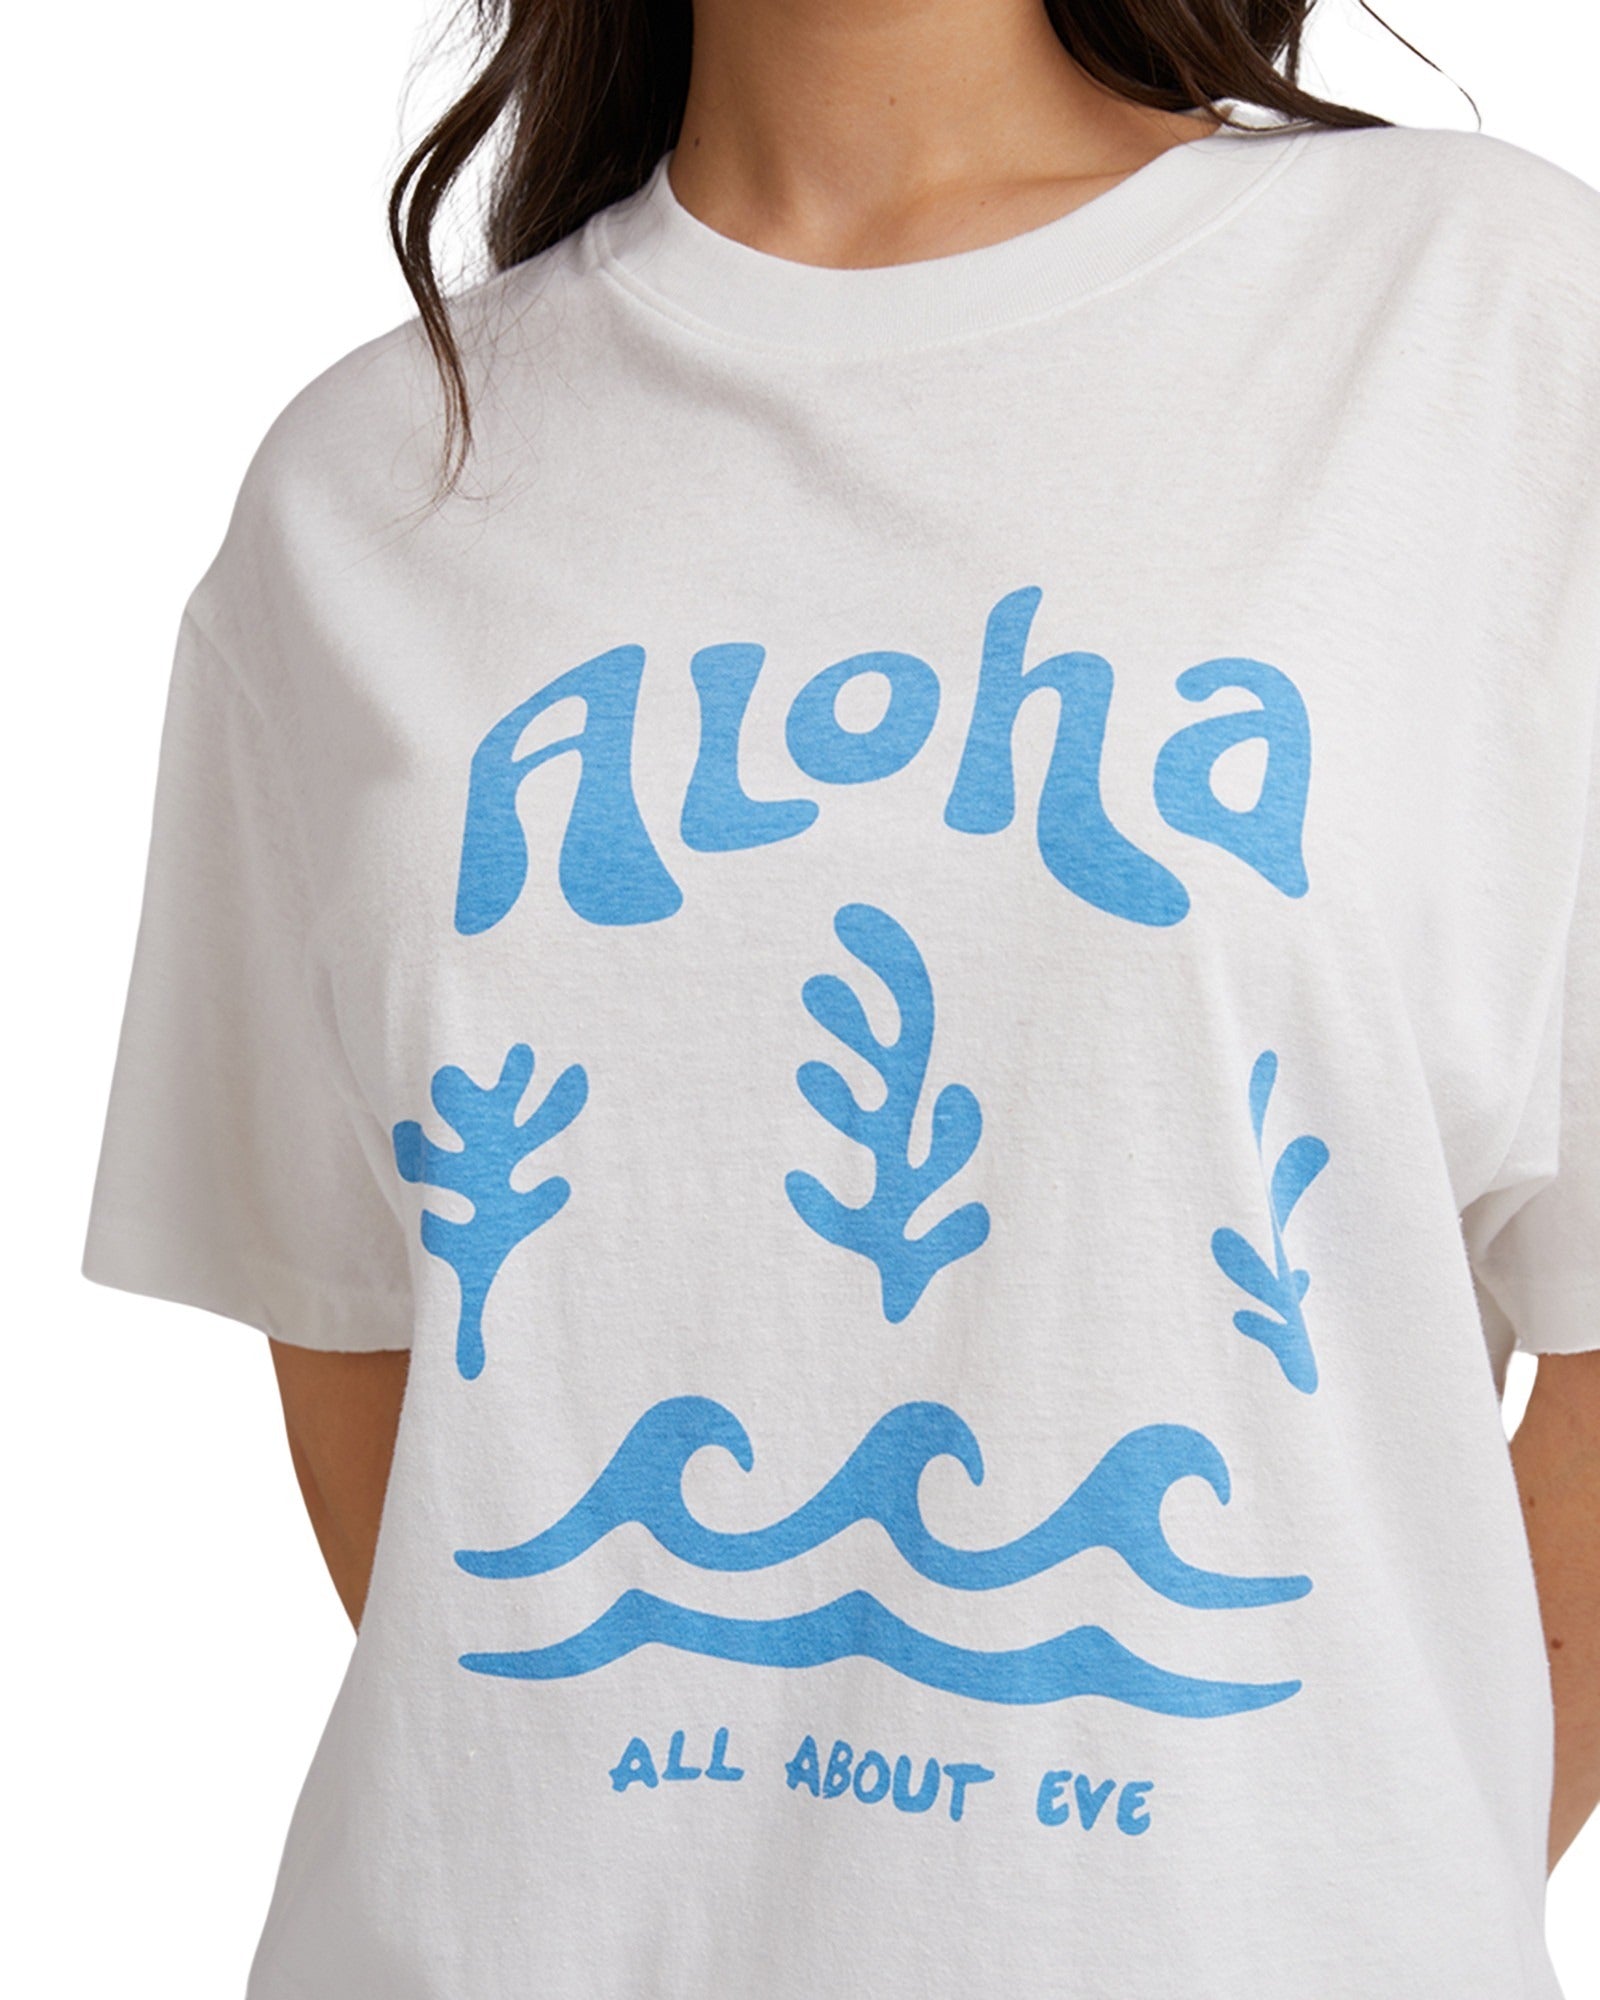 All About Eve - Aloha Tee - Vintage White